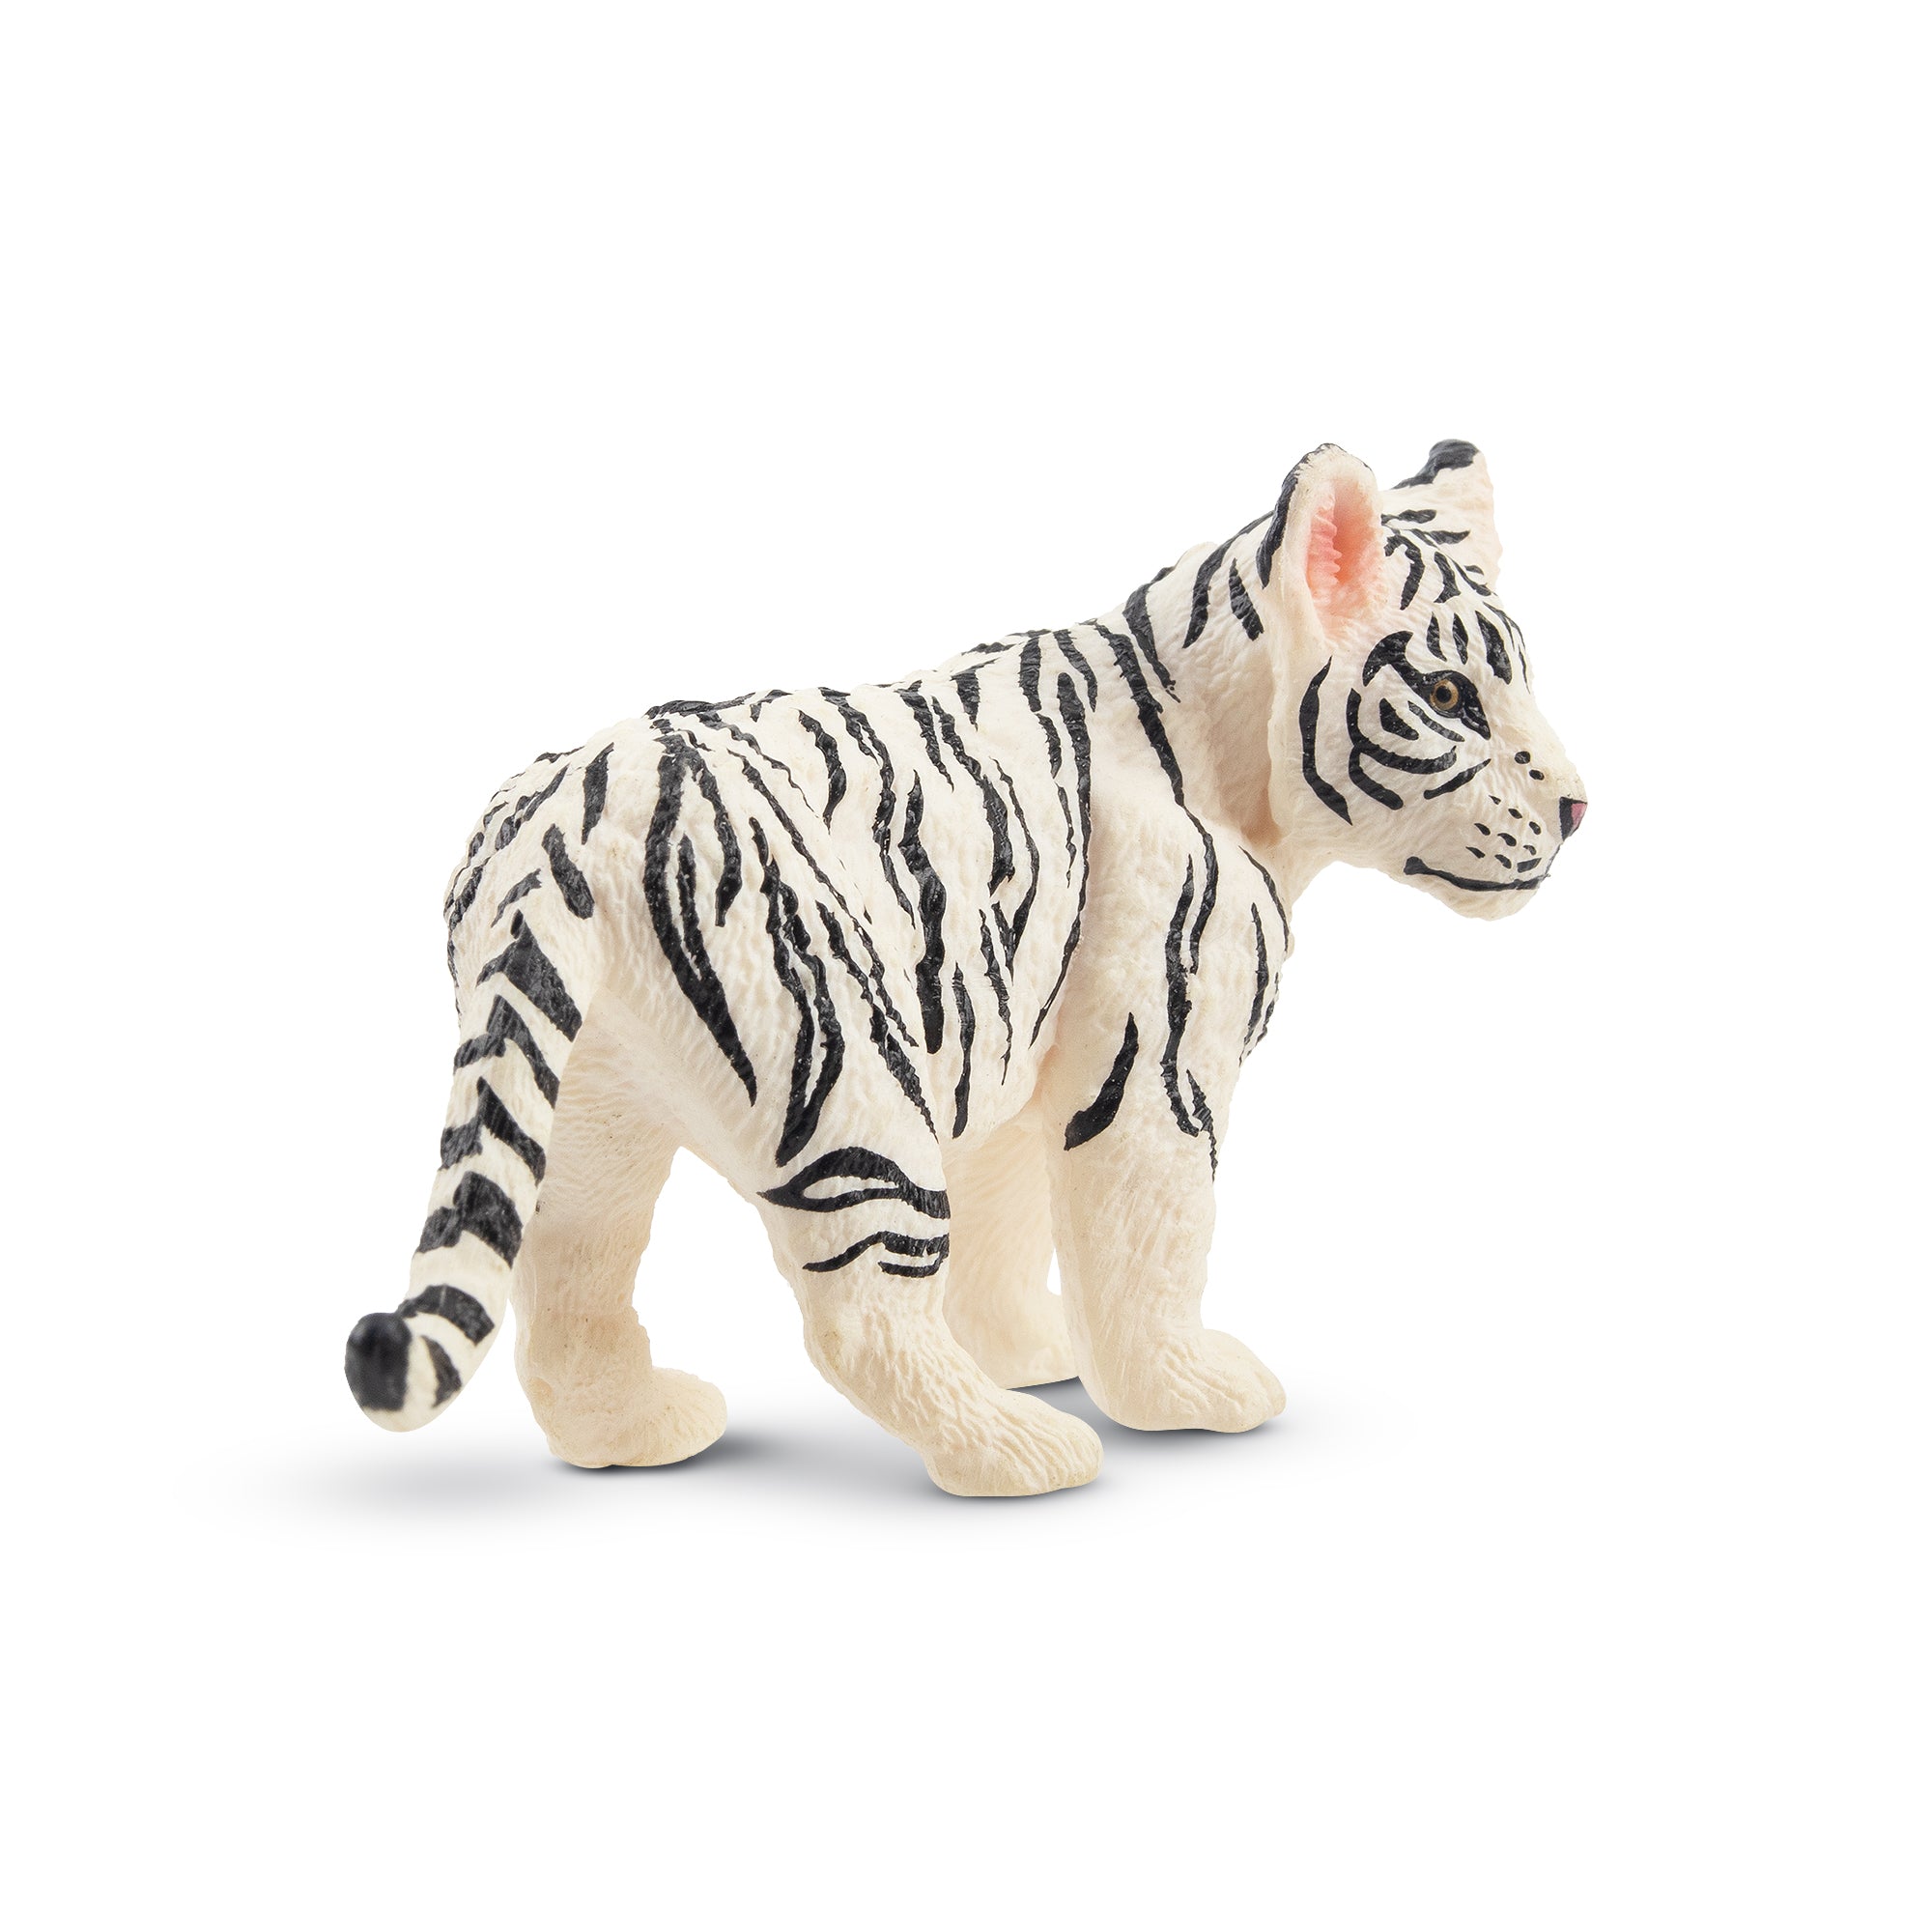 Toymany Standing White Tiger Cub Figurine Toy - 1-2